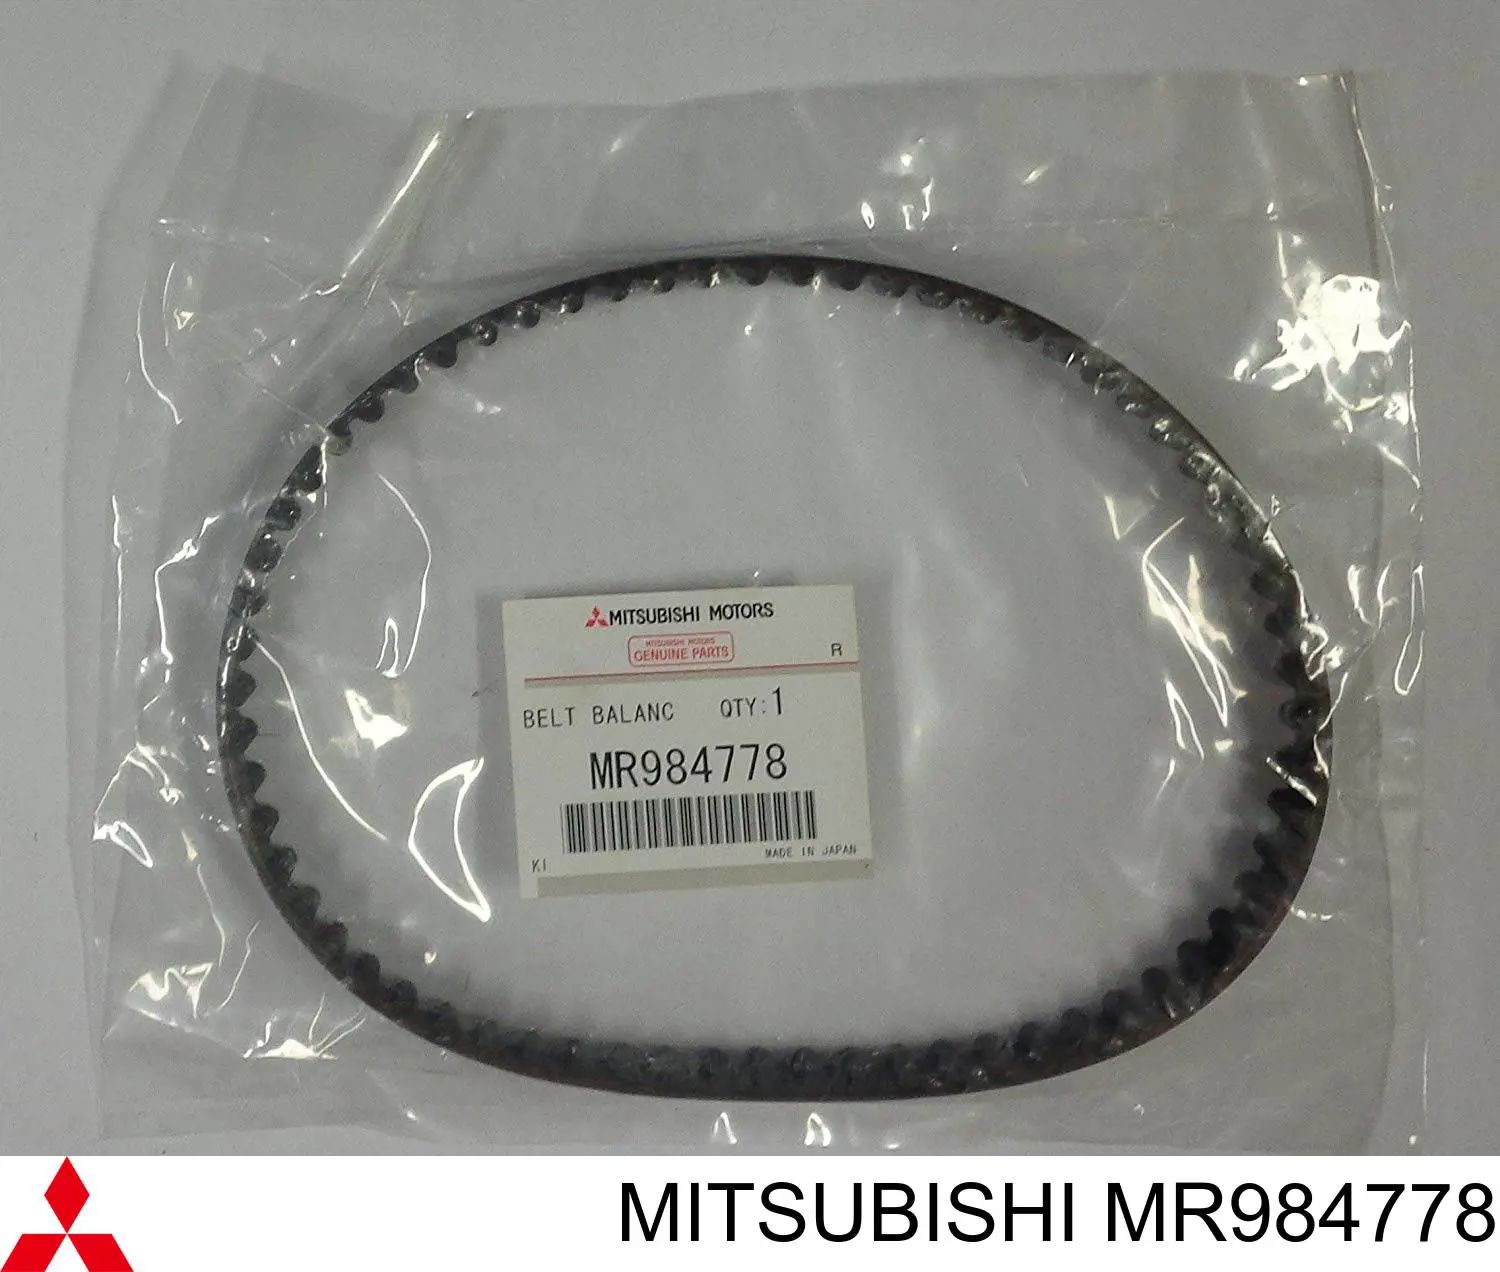 MR984778 Mitsubishi ремень балансировочного вала